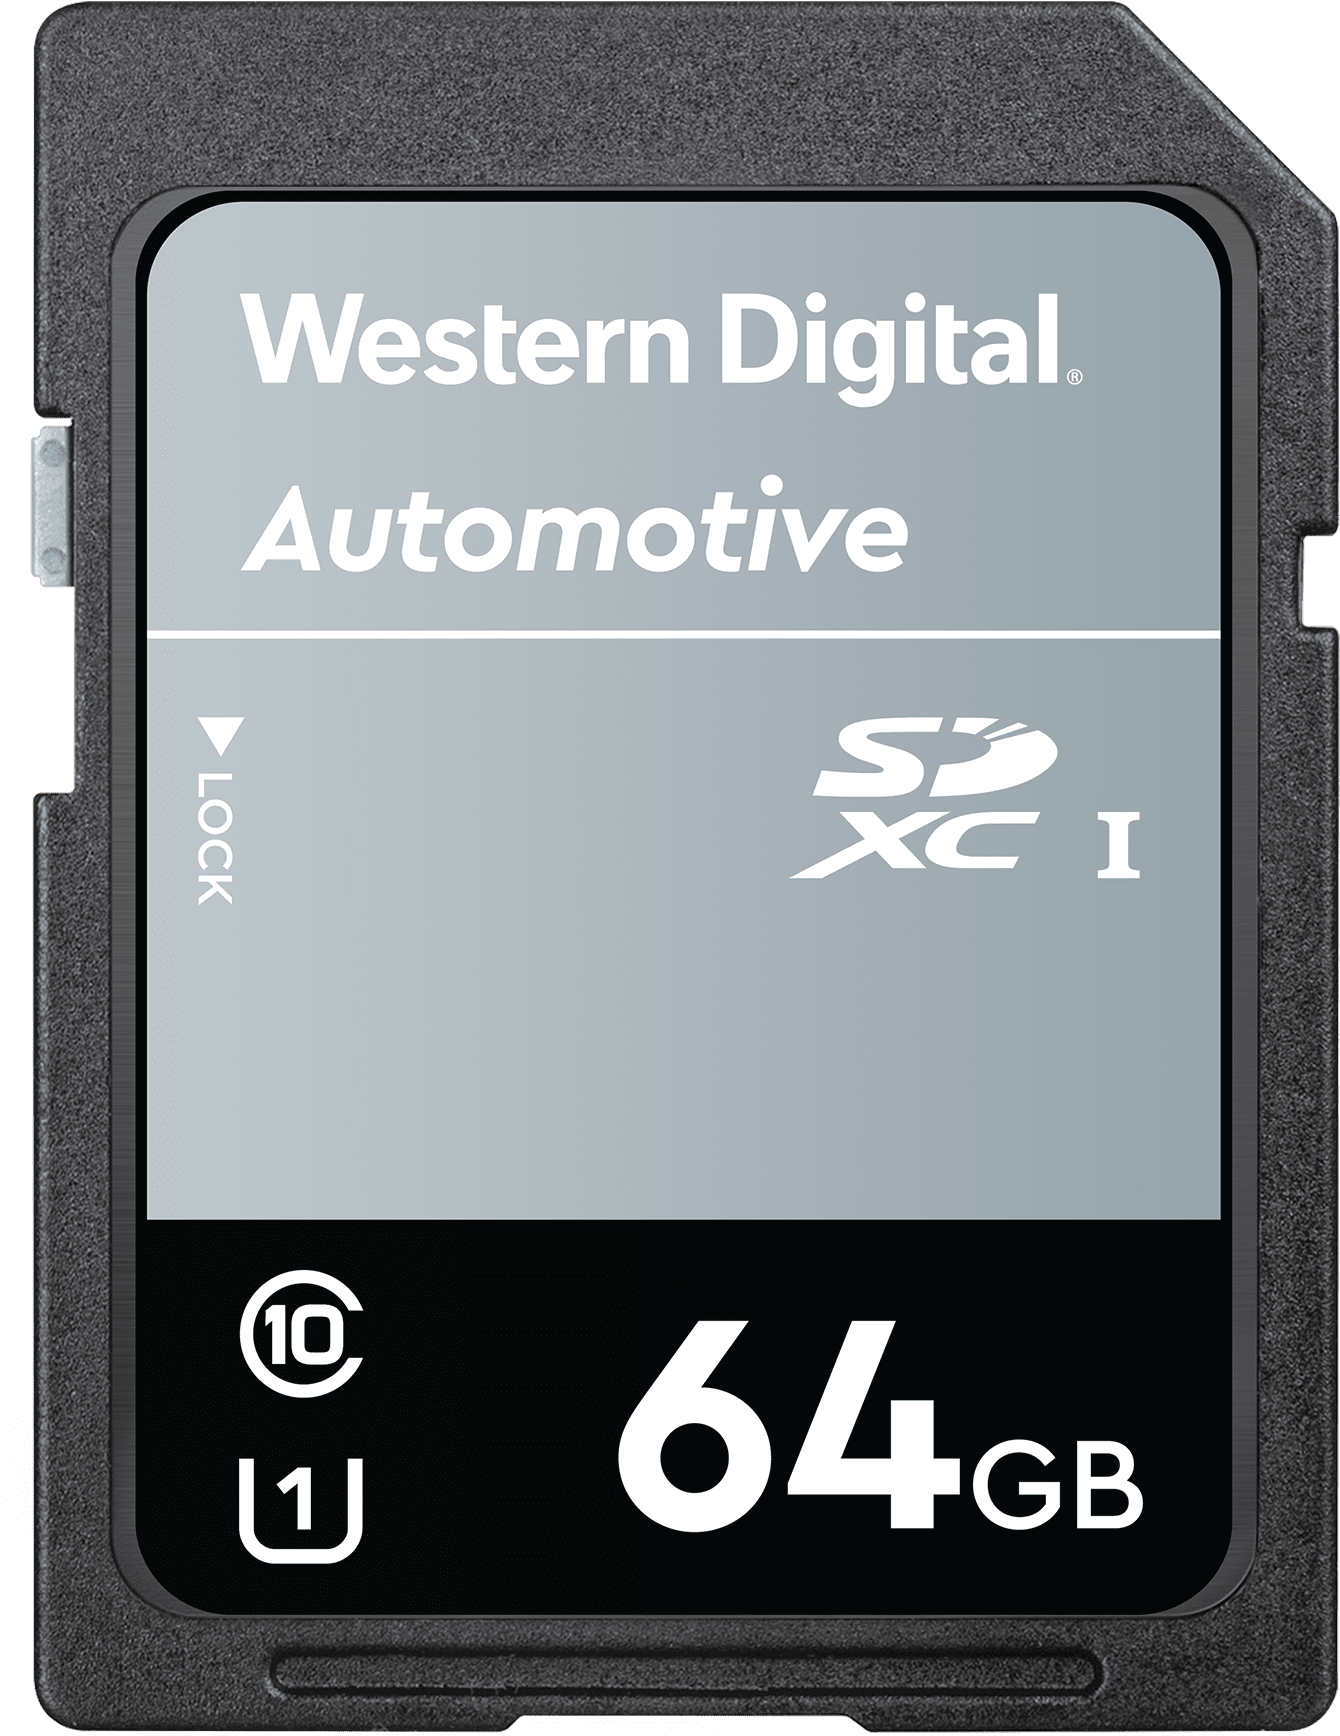 Western Digital Automotive S D X C64 G B Card PNG